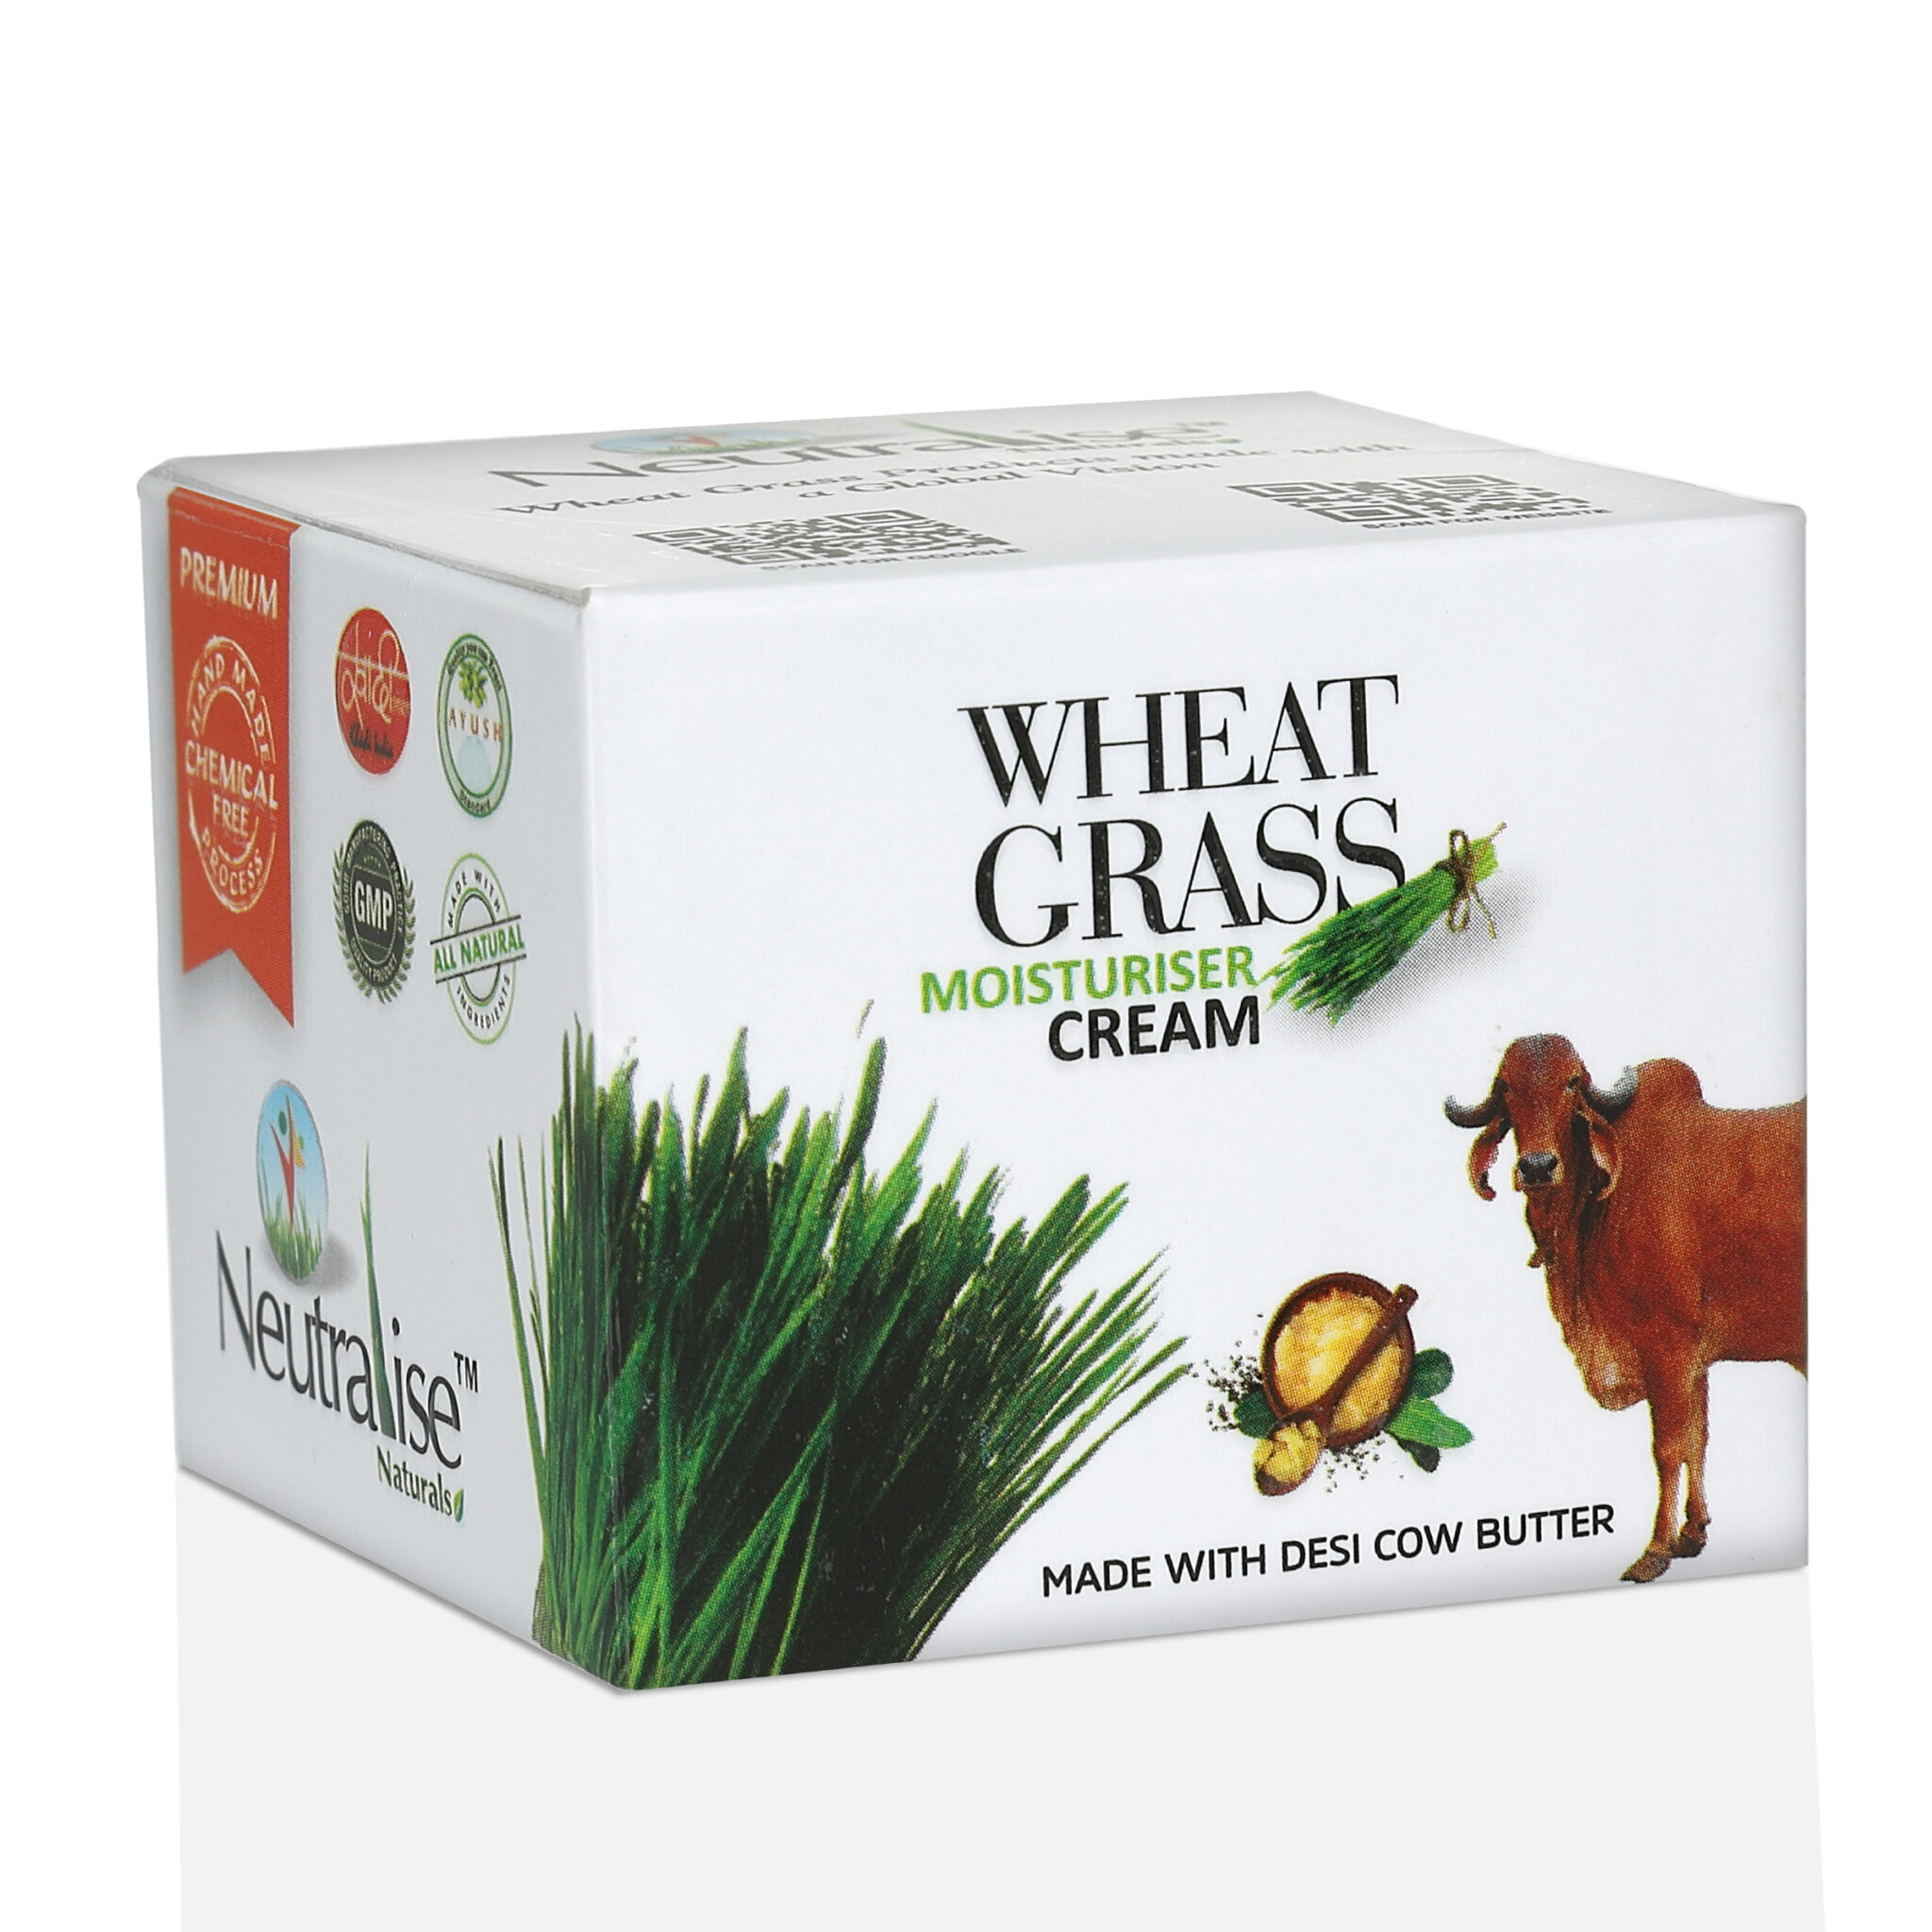 Neutralise NaturalsWheat Grass Moisturizer Cream